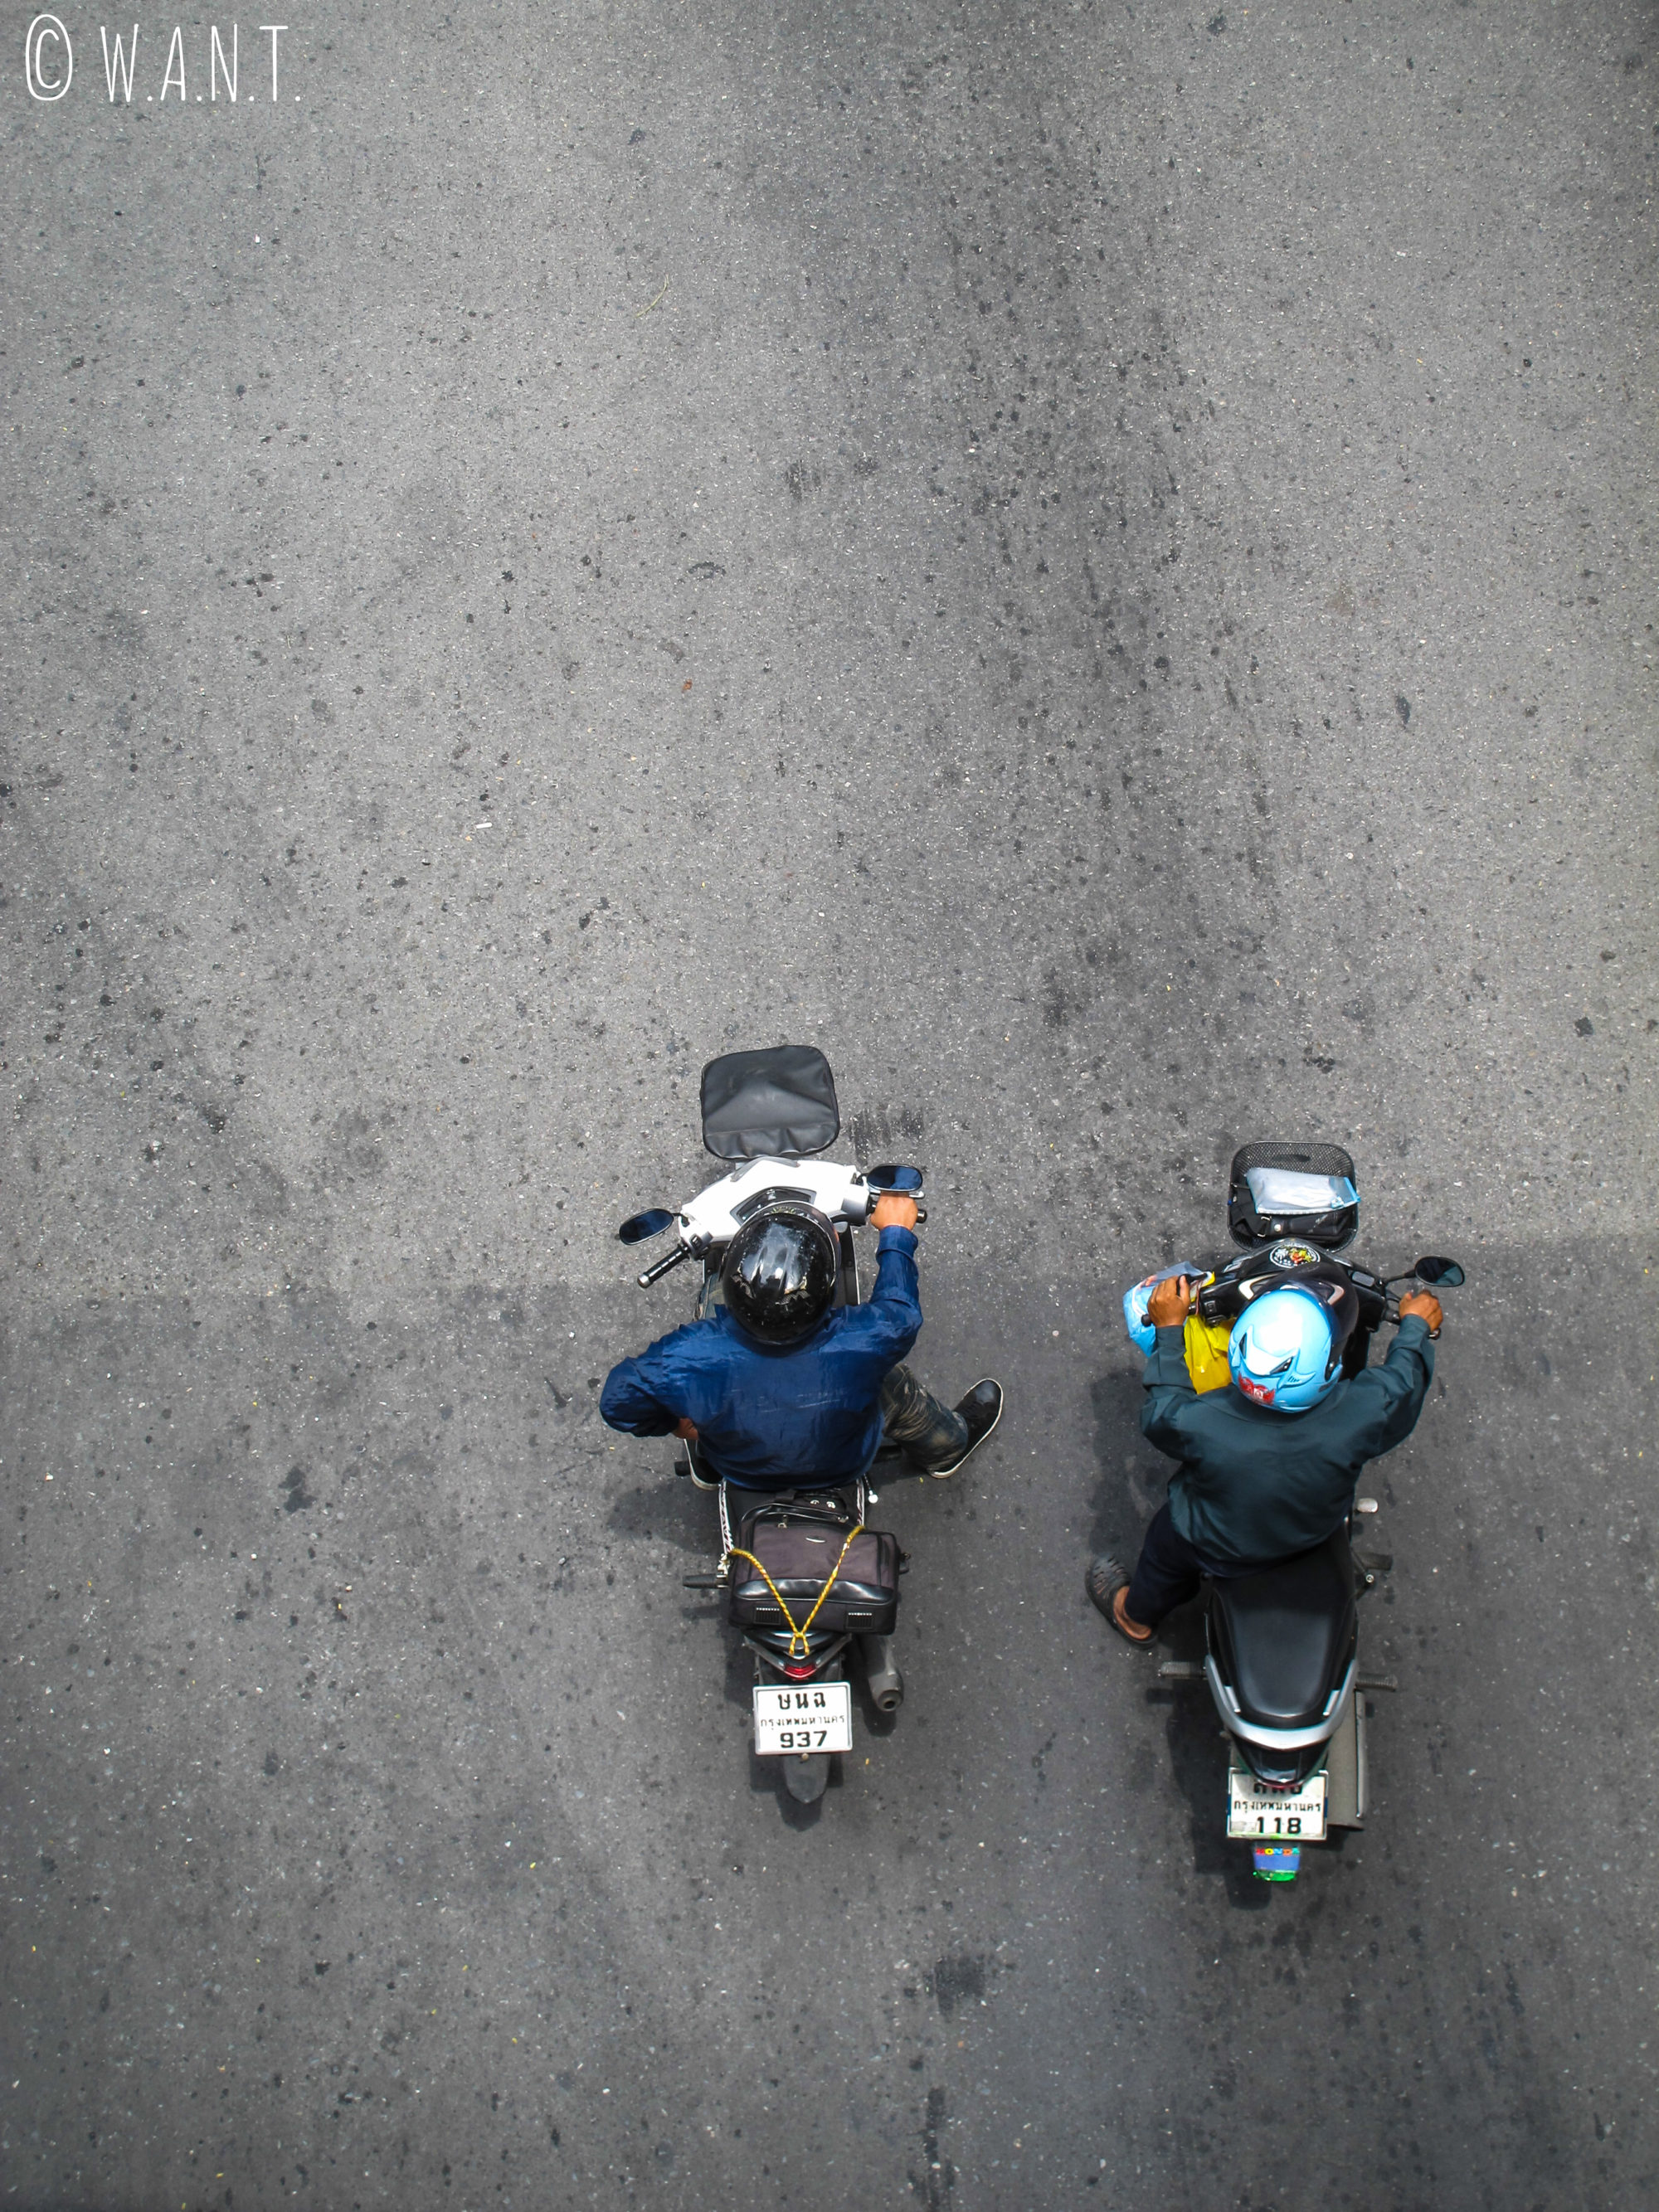 Vue en plongée sur des motos dans les rues de Bangkok